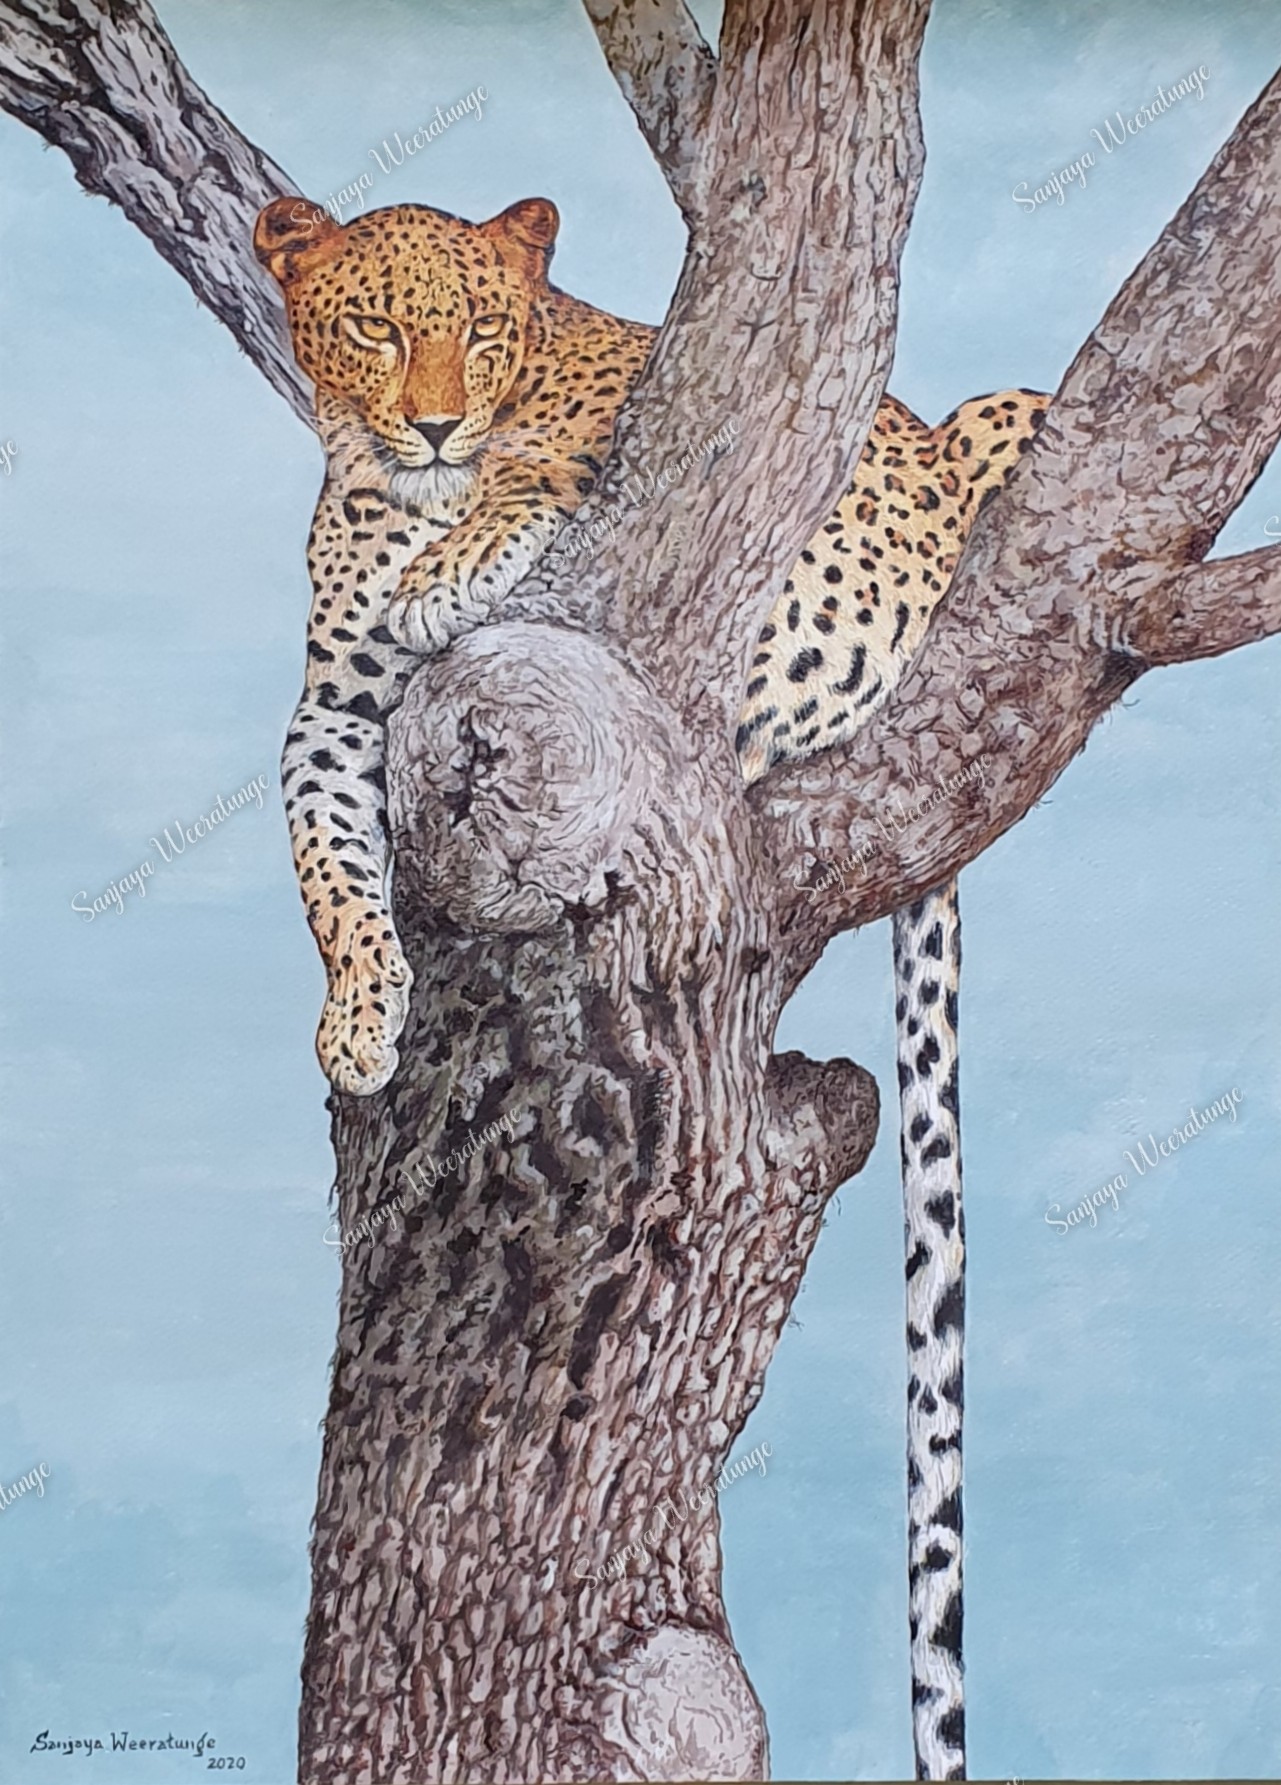 Leopard look out by sanjaya Weeratunge